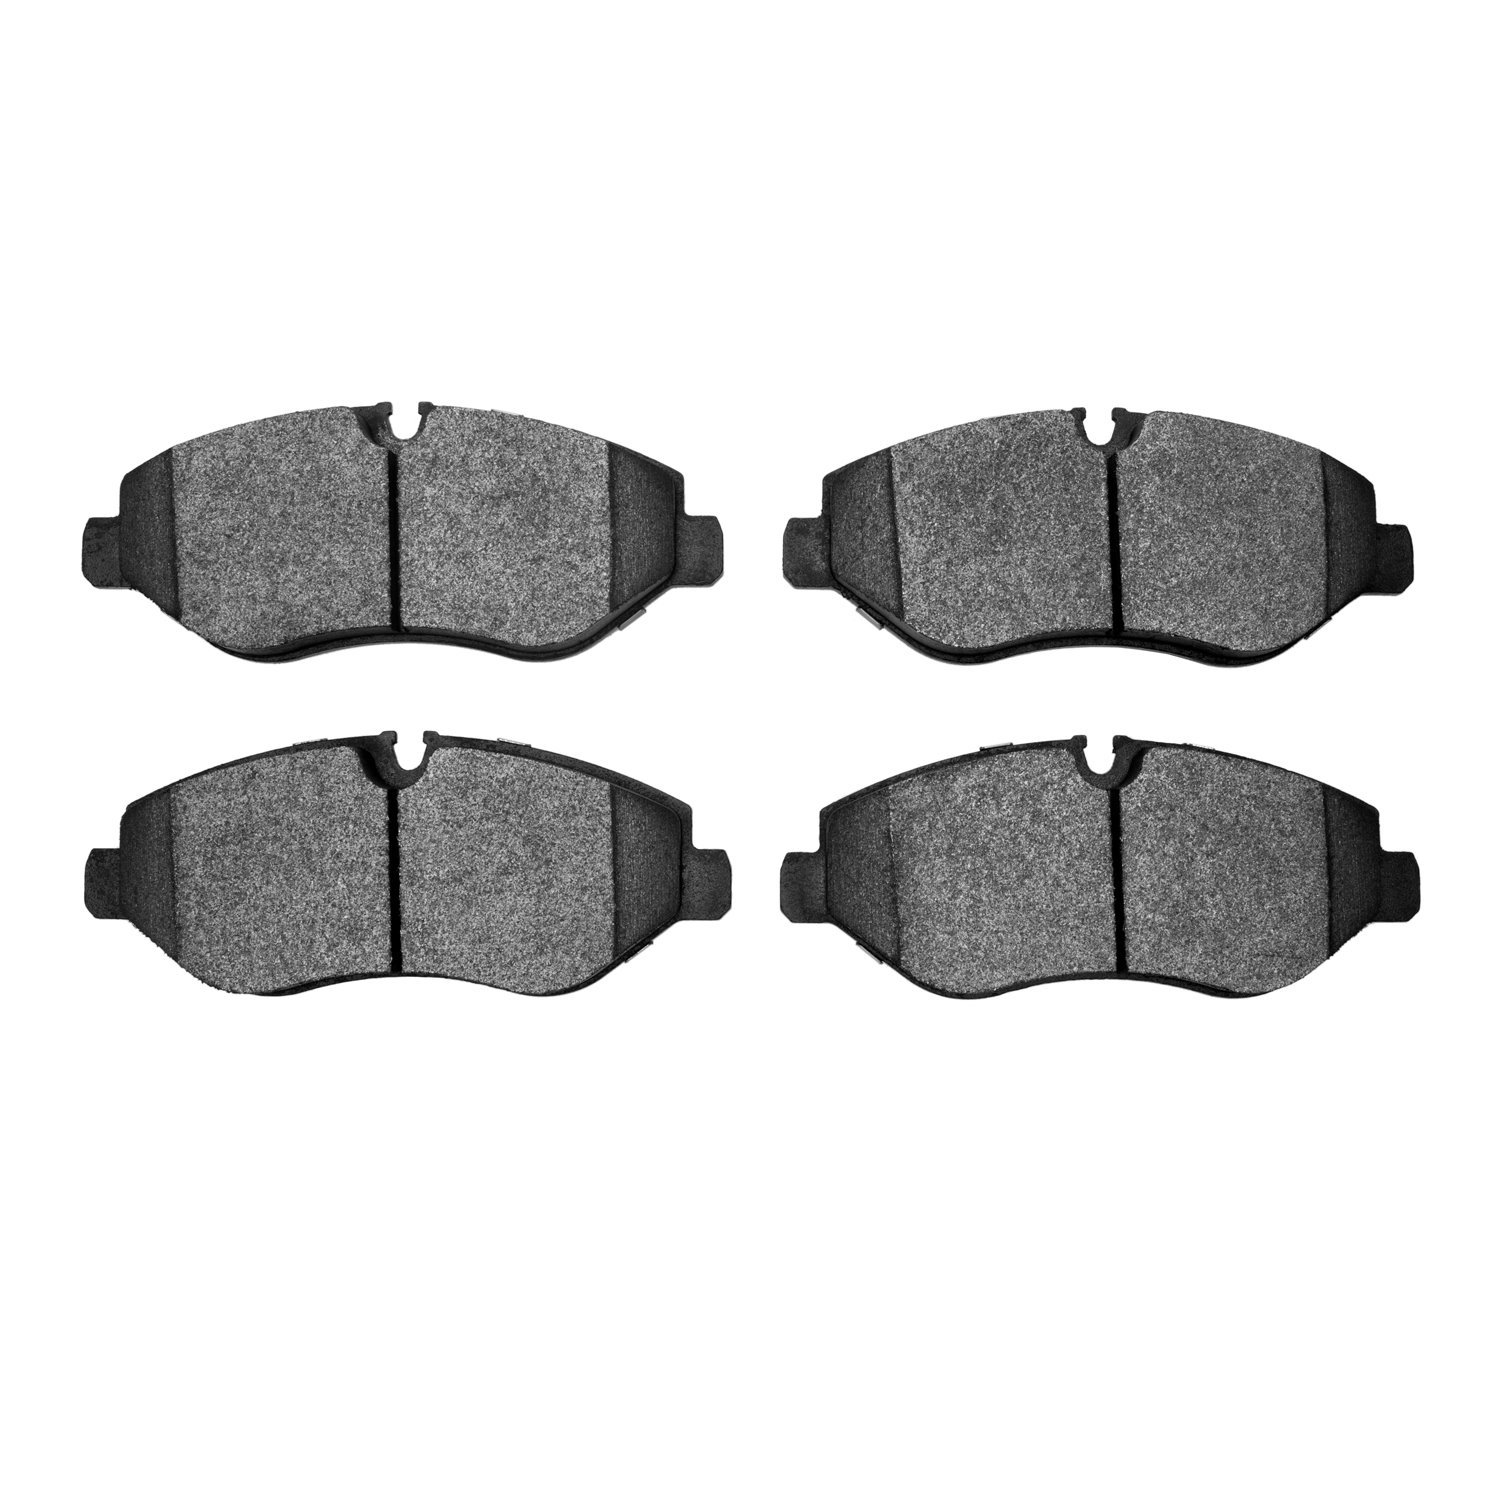 1551-1316-00 5000 Advanced Semi-Metallic Brake Pads, Fits Select Multiple Makes/Models, Position: Fr,Front